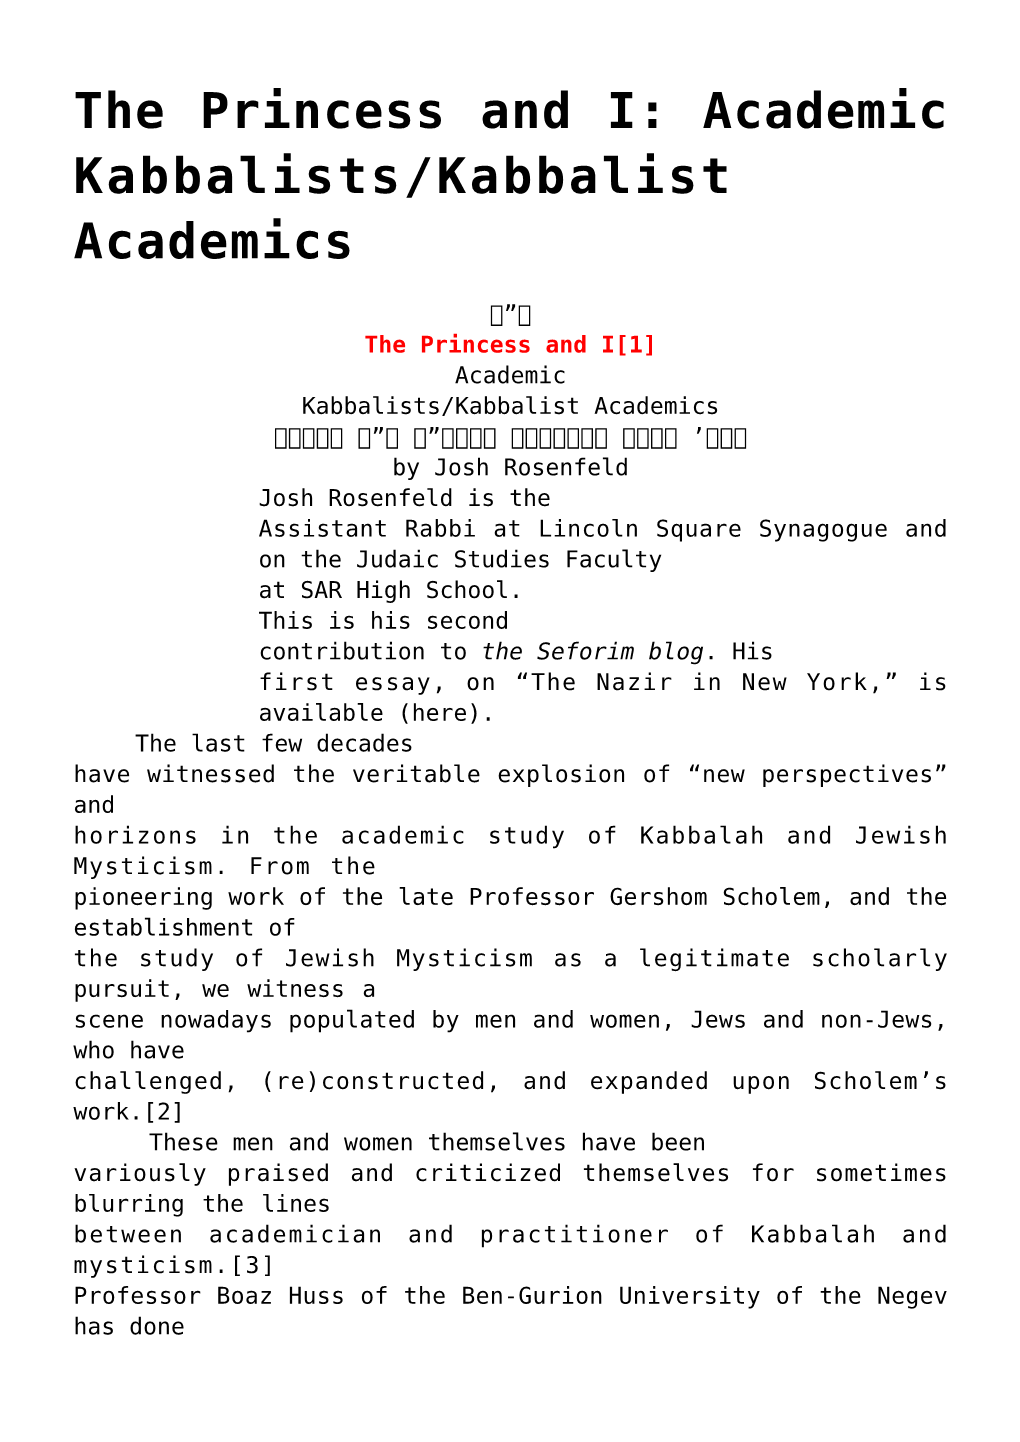 Academic Kabbalists/Kabbalist Academics,A